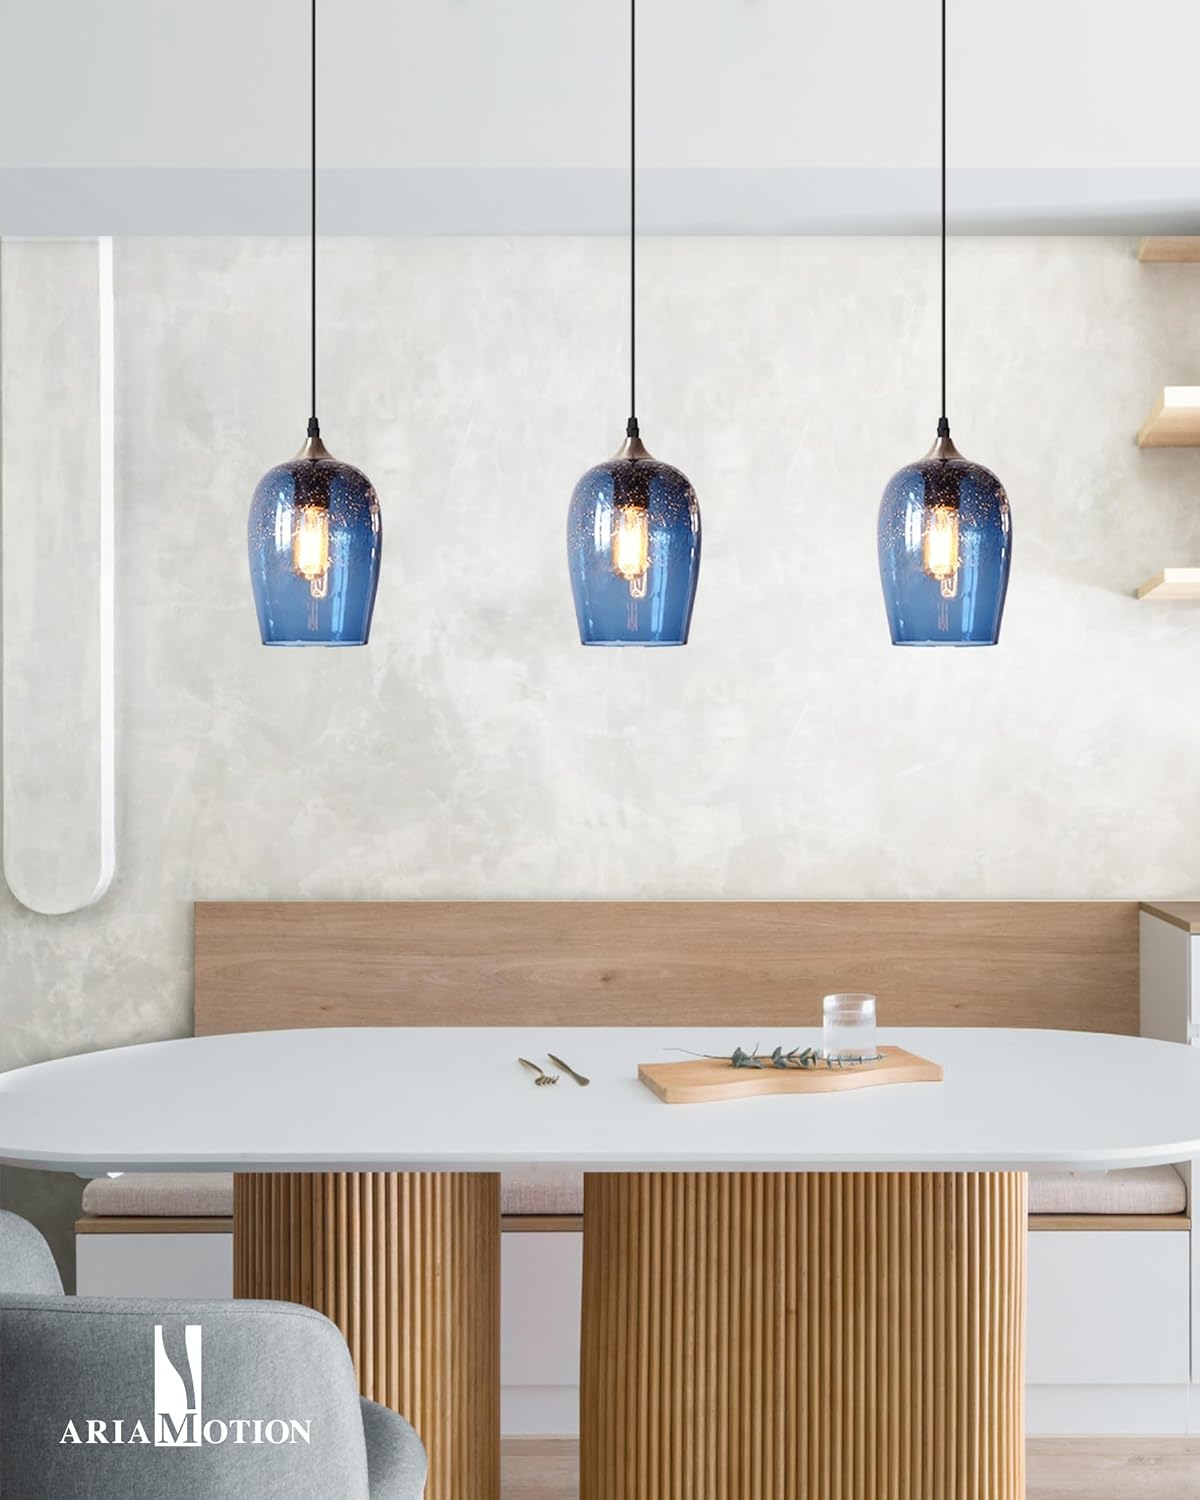 0003691 Ariamotion Glass Pendant Lights Kitchen Island Blue Modern Light Fixtures Ceiling Hanging Hand Craft 